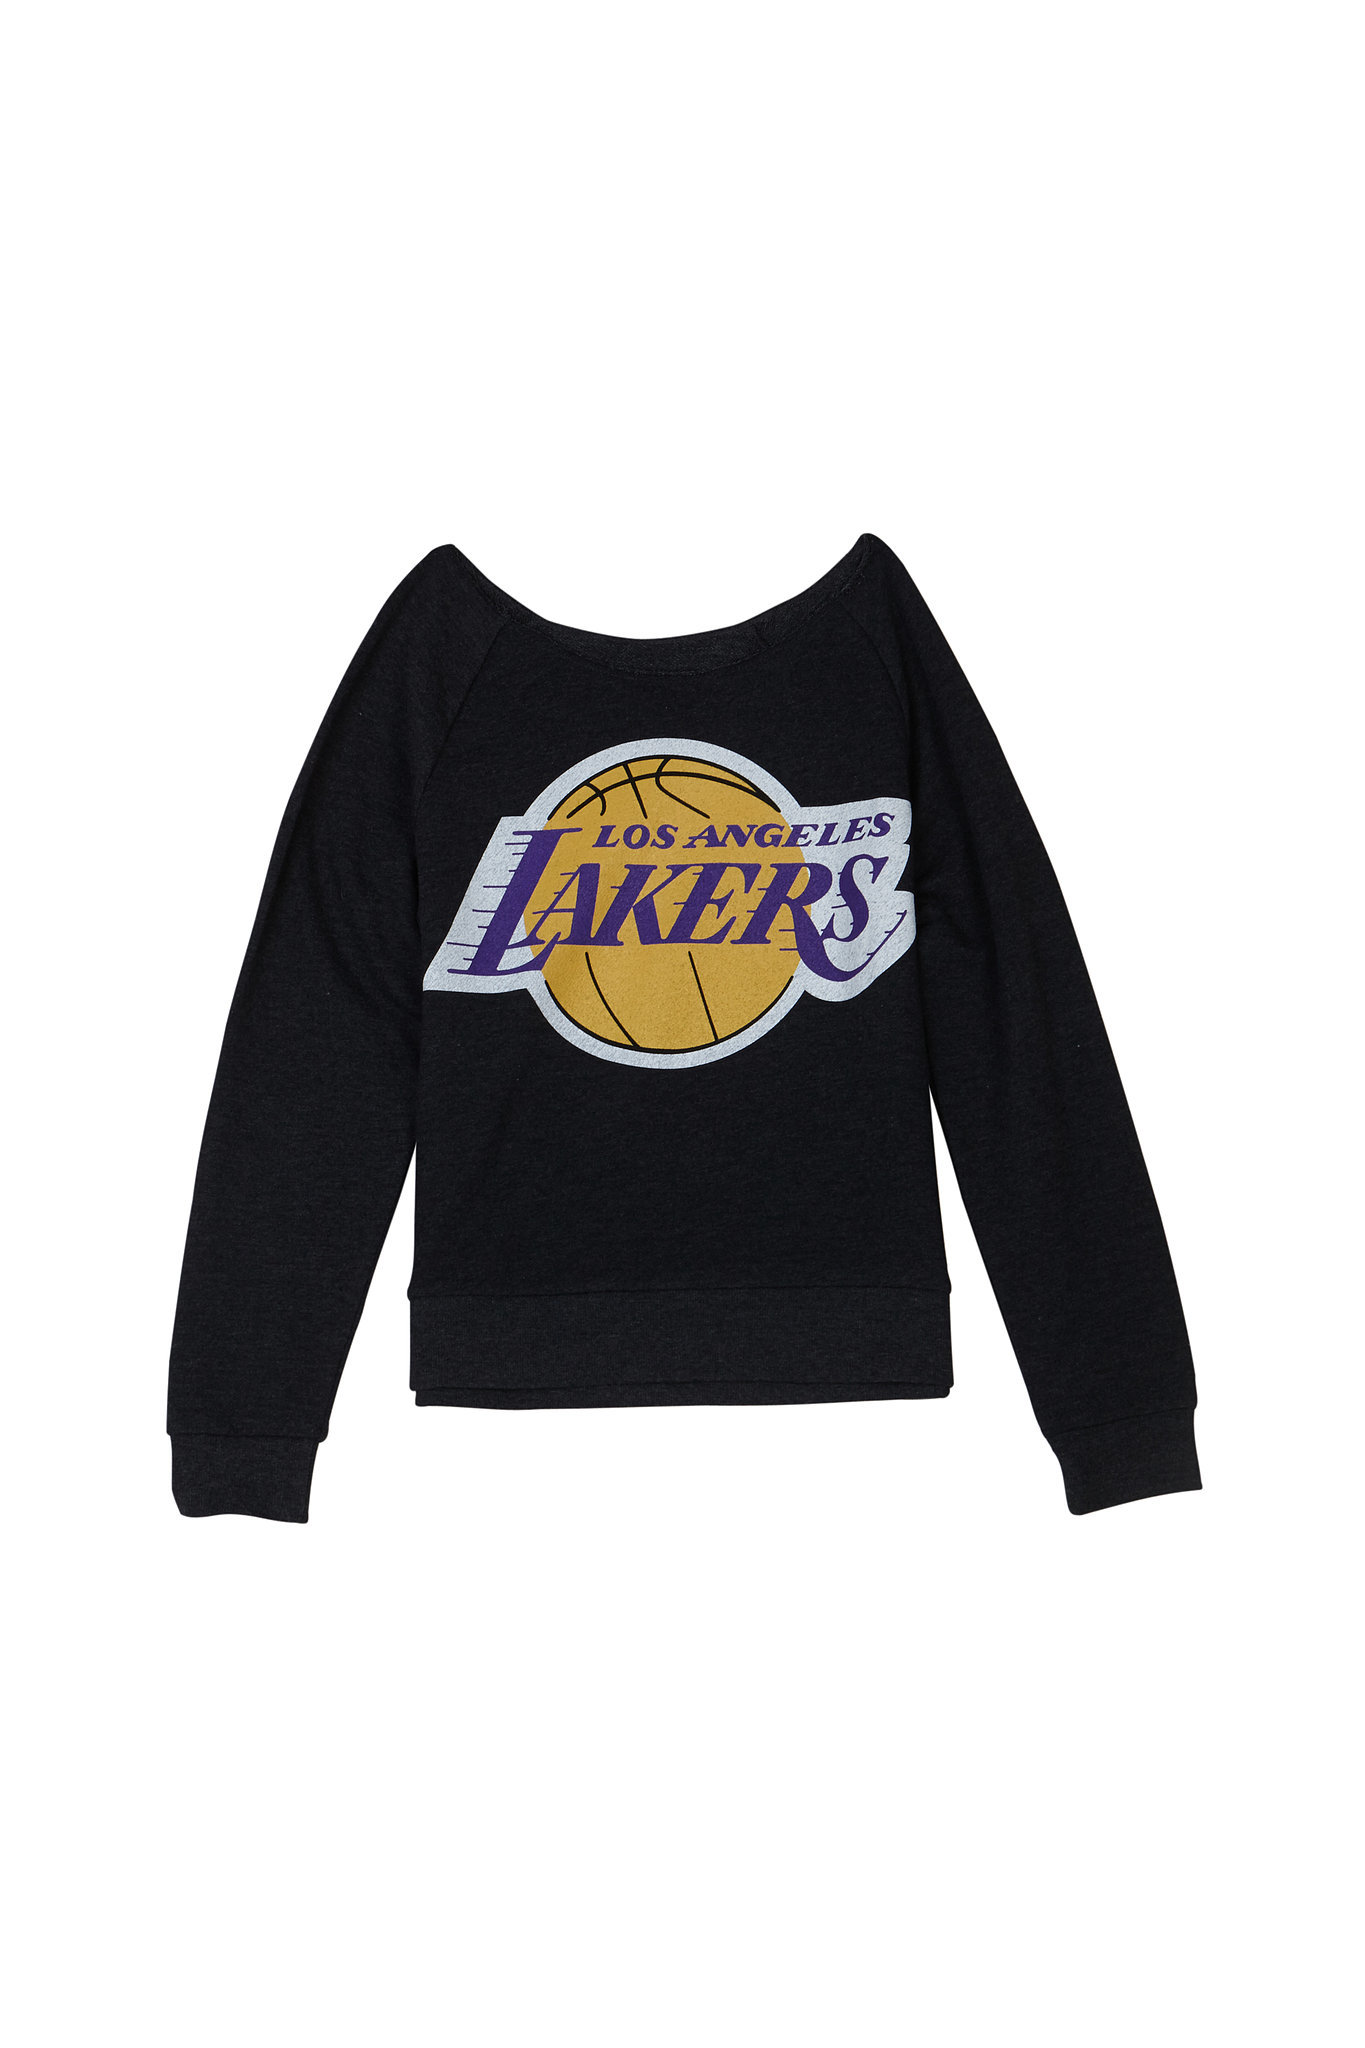 Forever 21 x NBA Lakers Sweatshirt